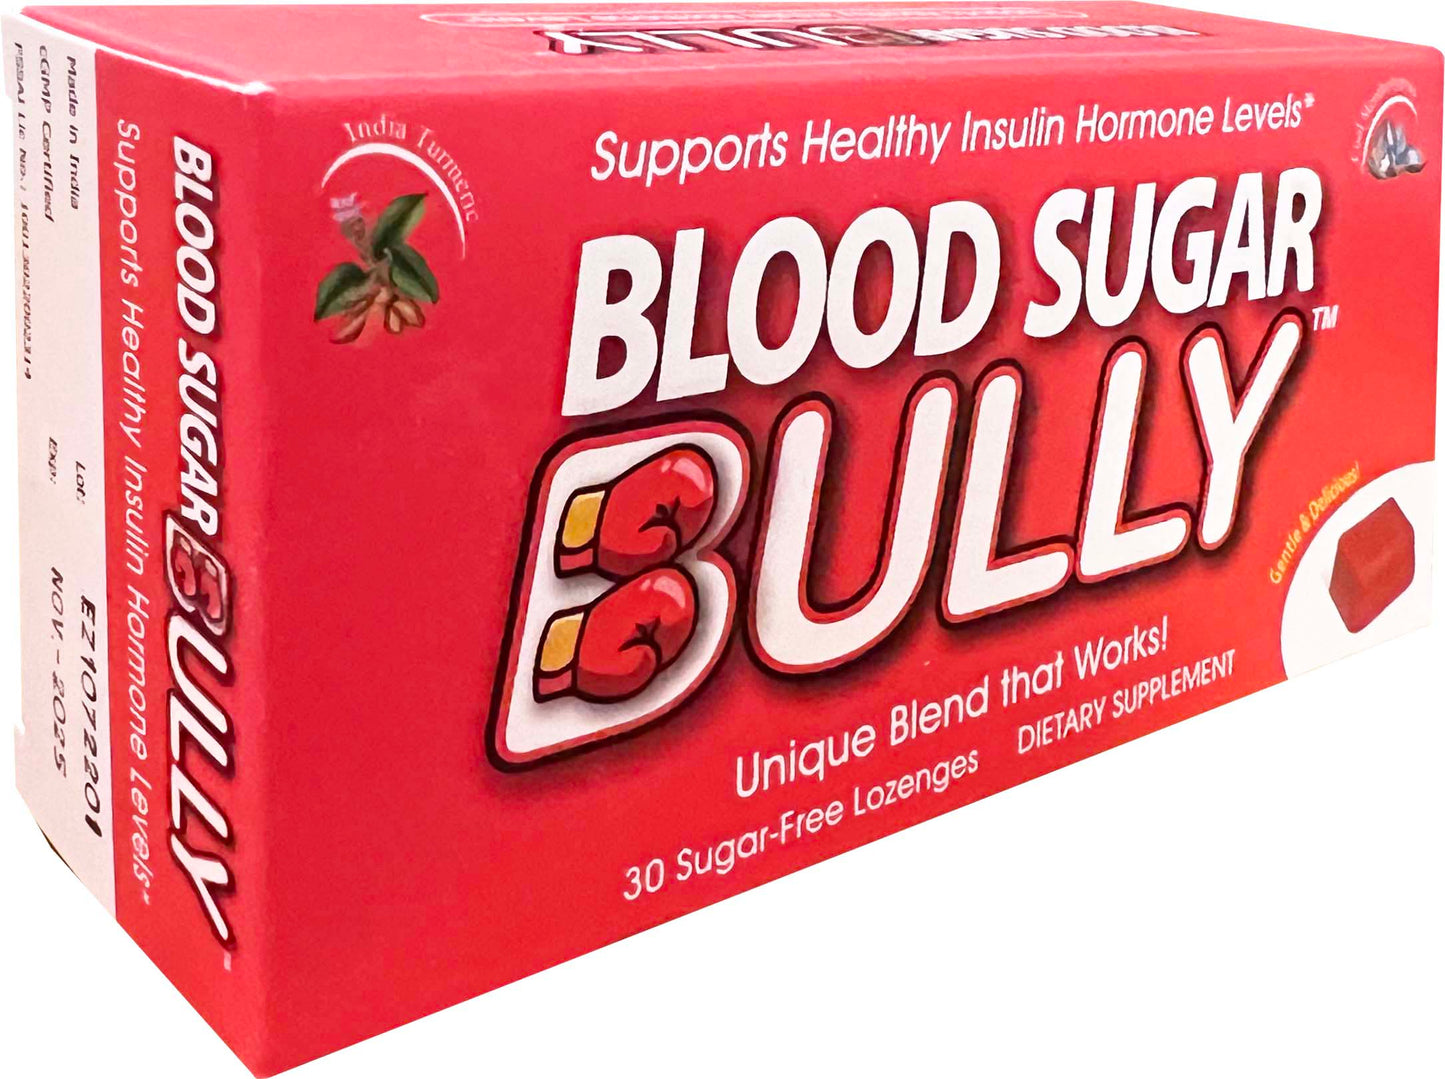 Blood Sugar Bully™ (30 Lozenges)